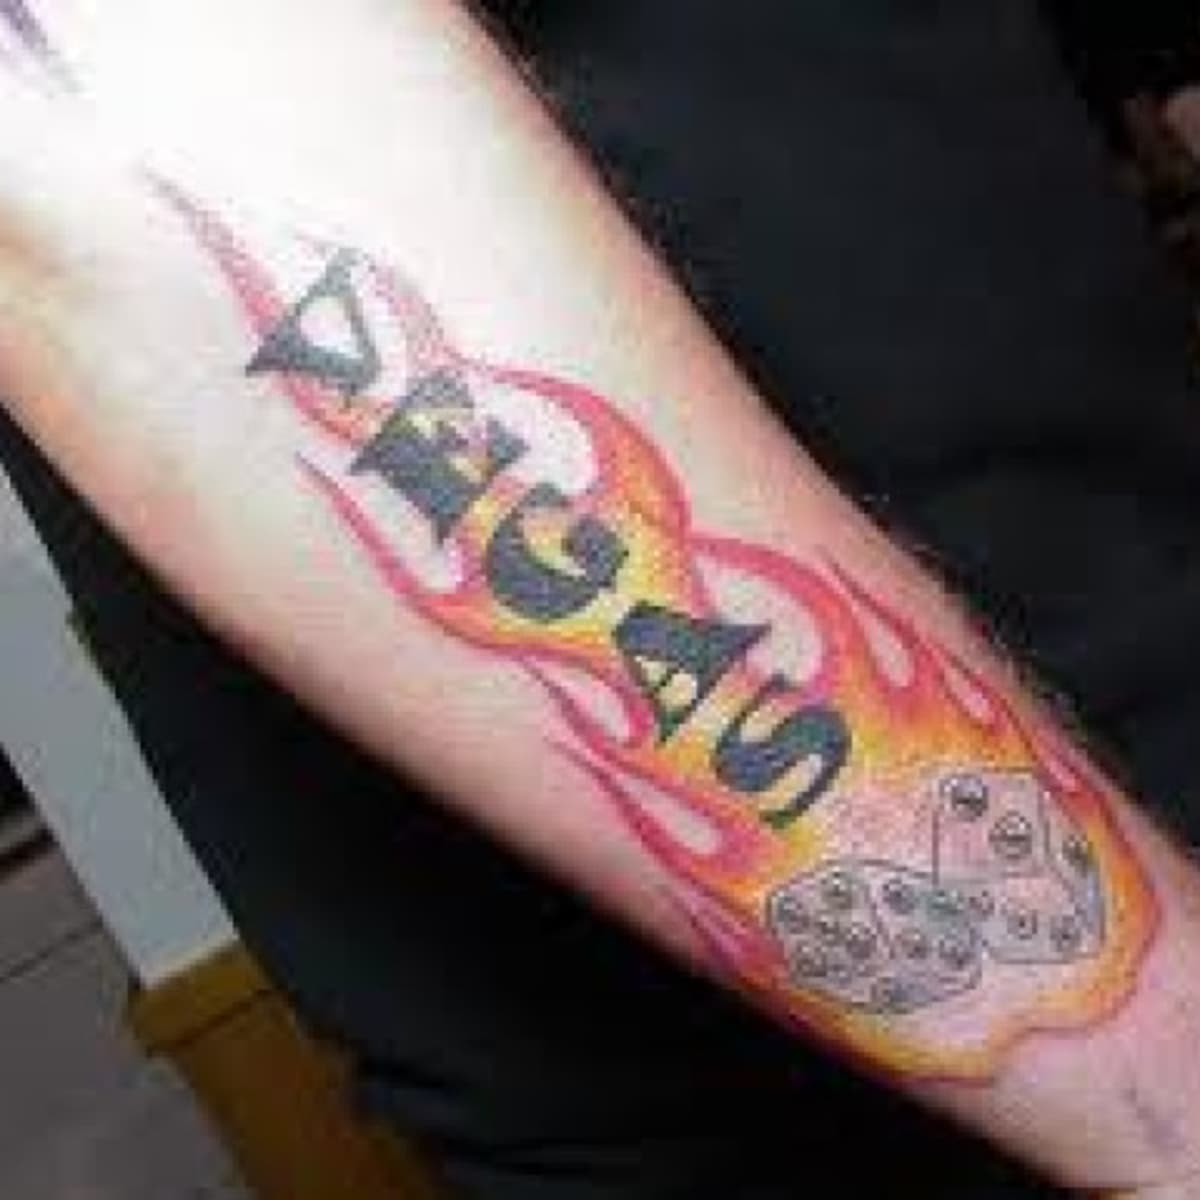 MInimalistic dice tattoo located on the forearm